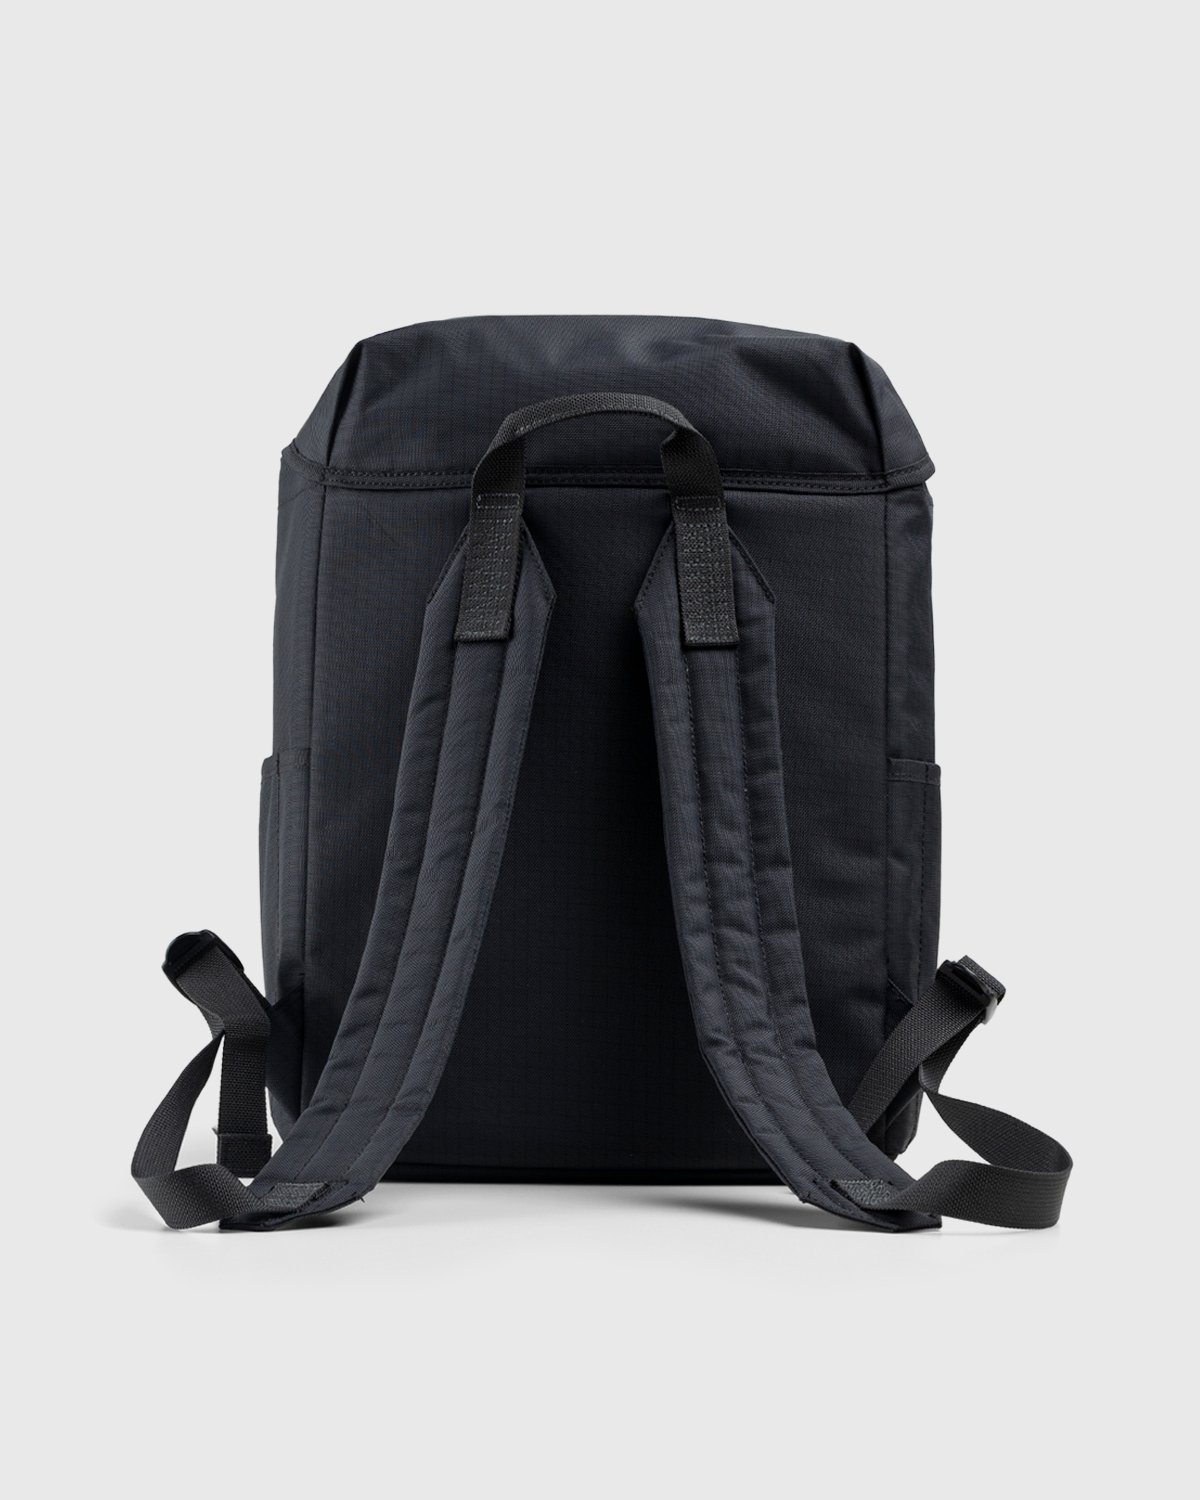 Acne Studios – Large Ripstop Backpack Black/Khaki Green - Backpacks - Black - Image 3